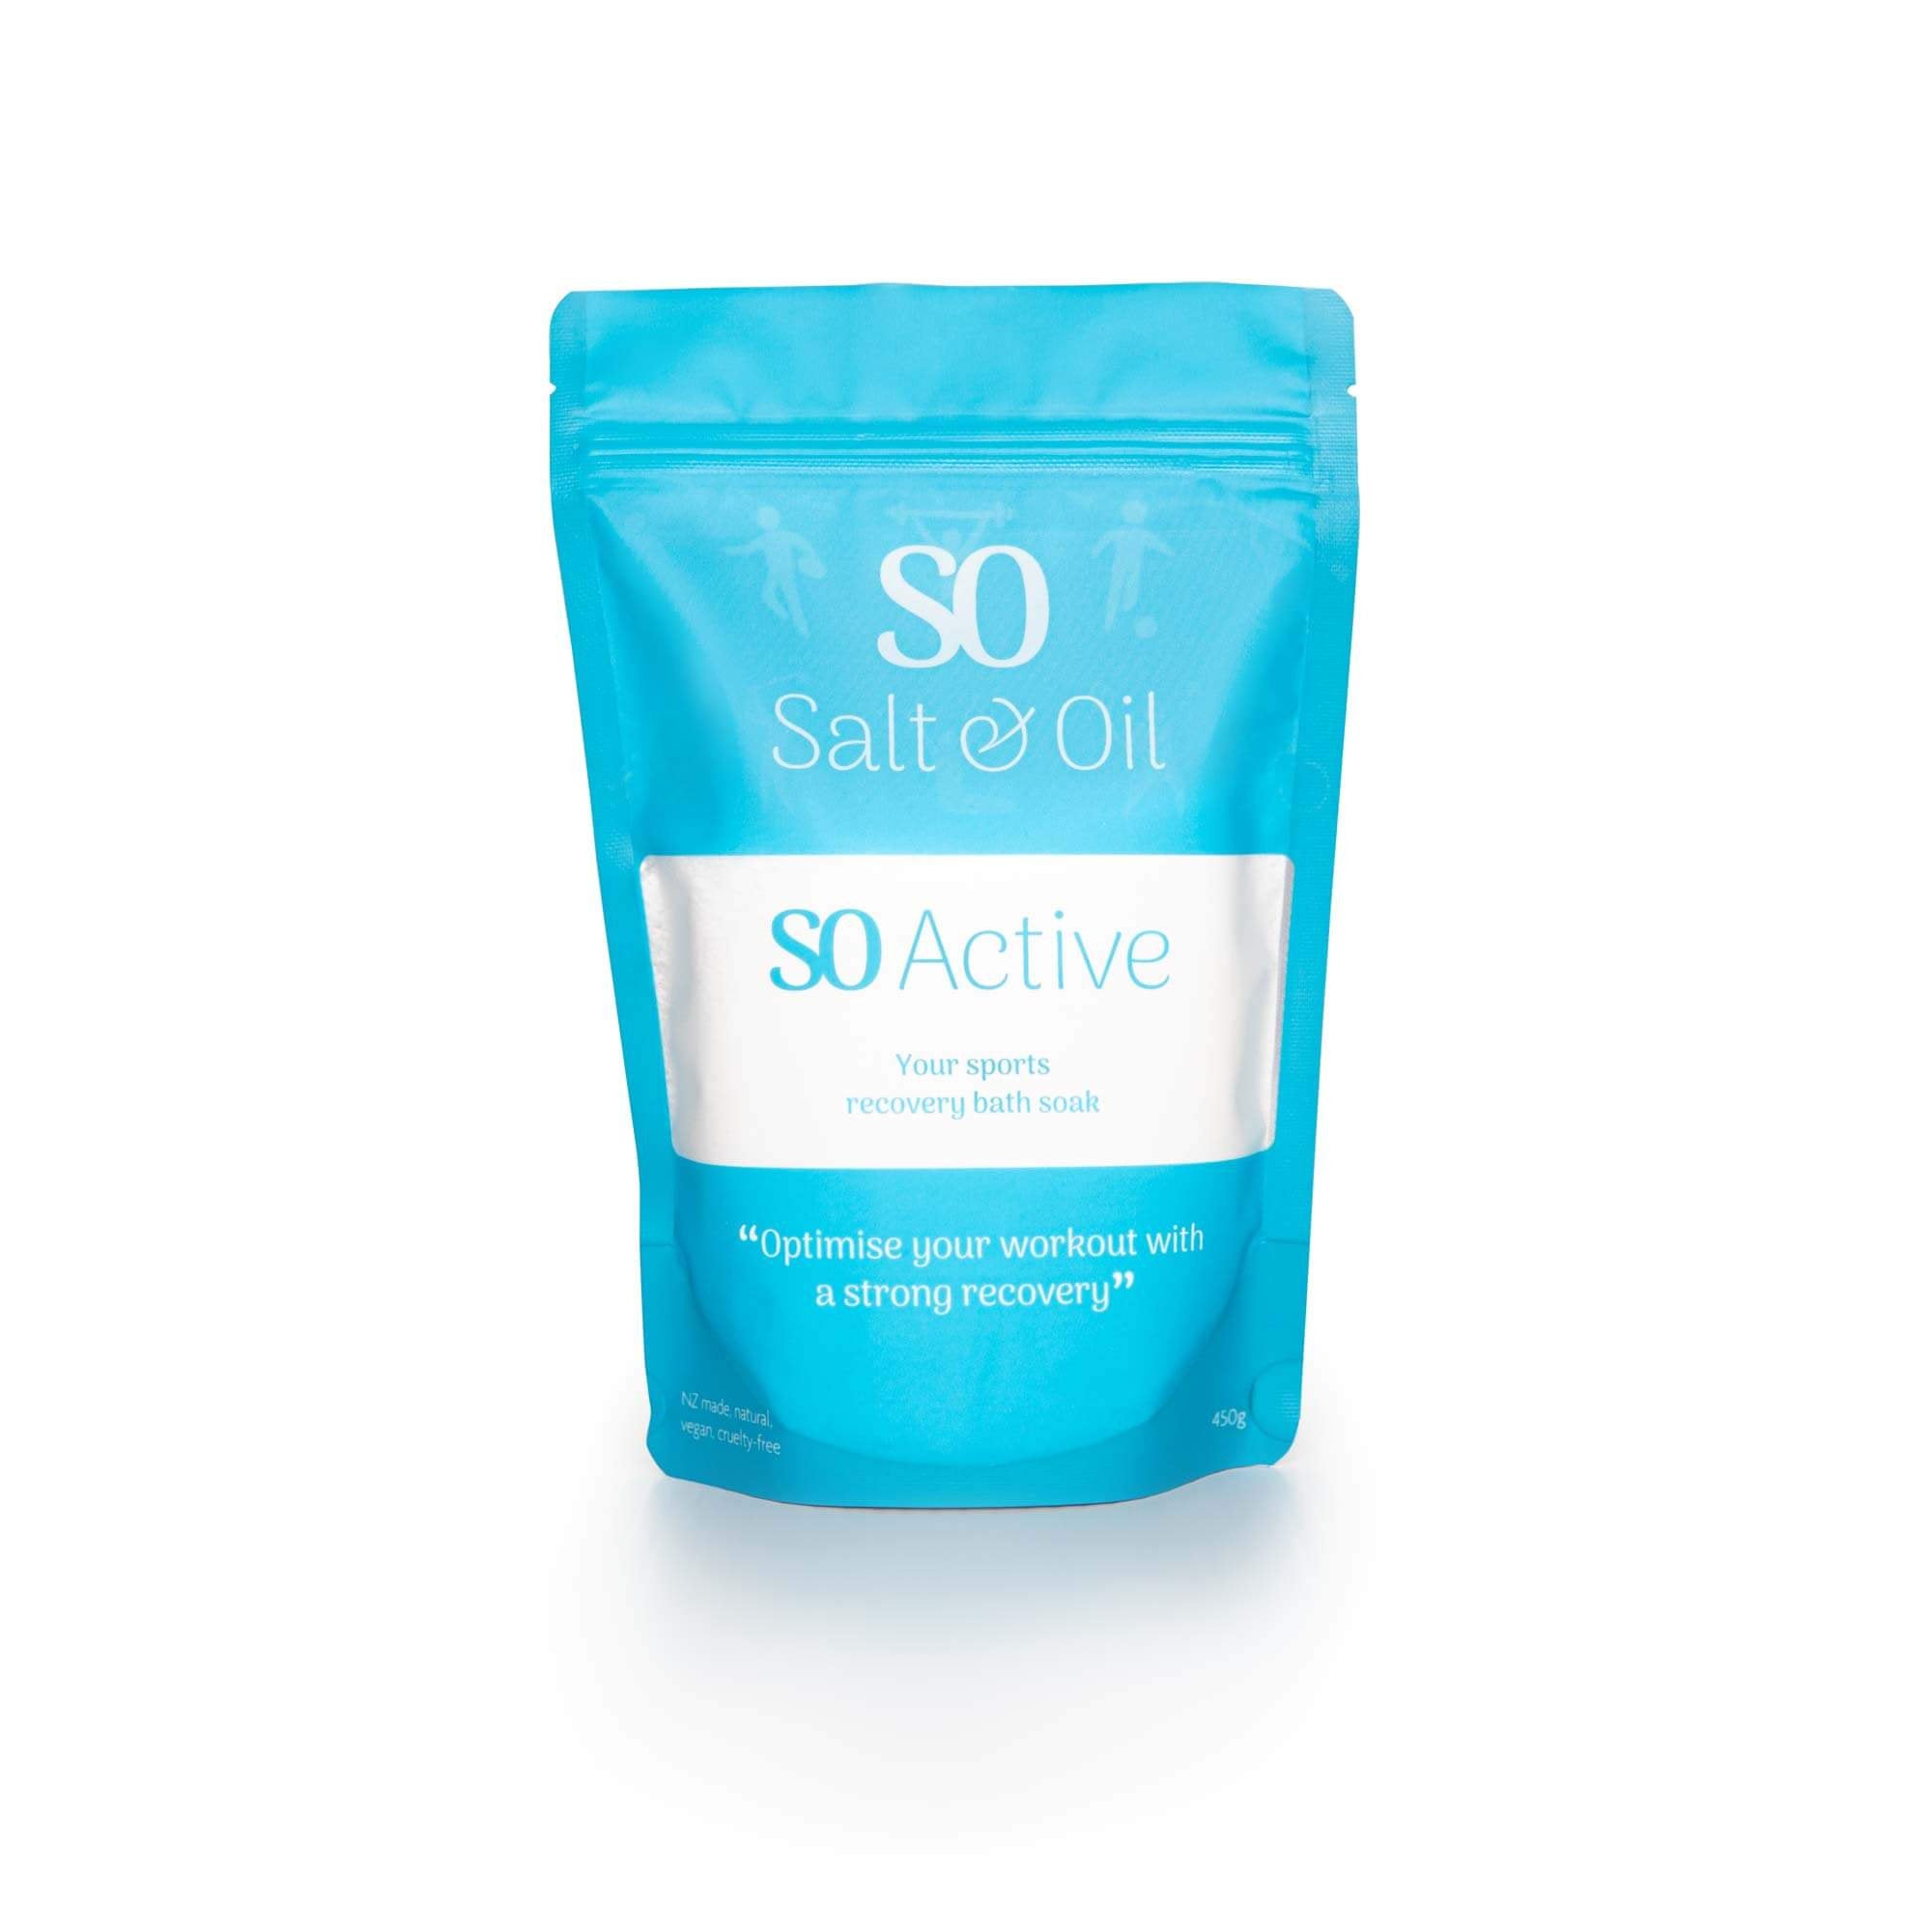 SO Salt and Oil - Active 500g